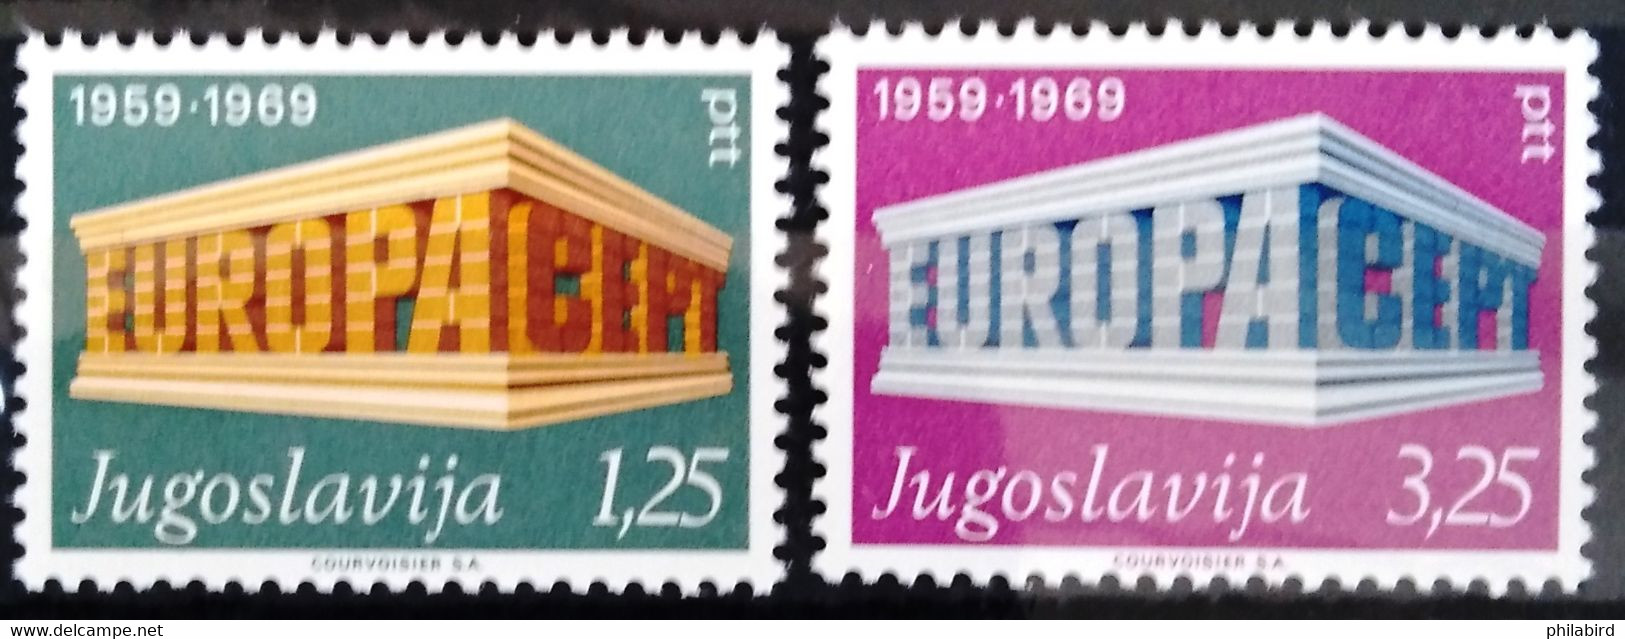 EUROPA 1969 - YOUGOSLAVIE                 N° 1252/1253                     NEUF** - 1969